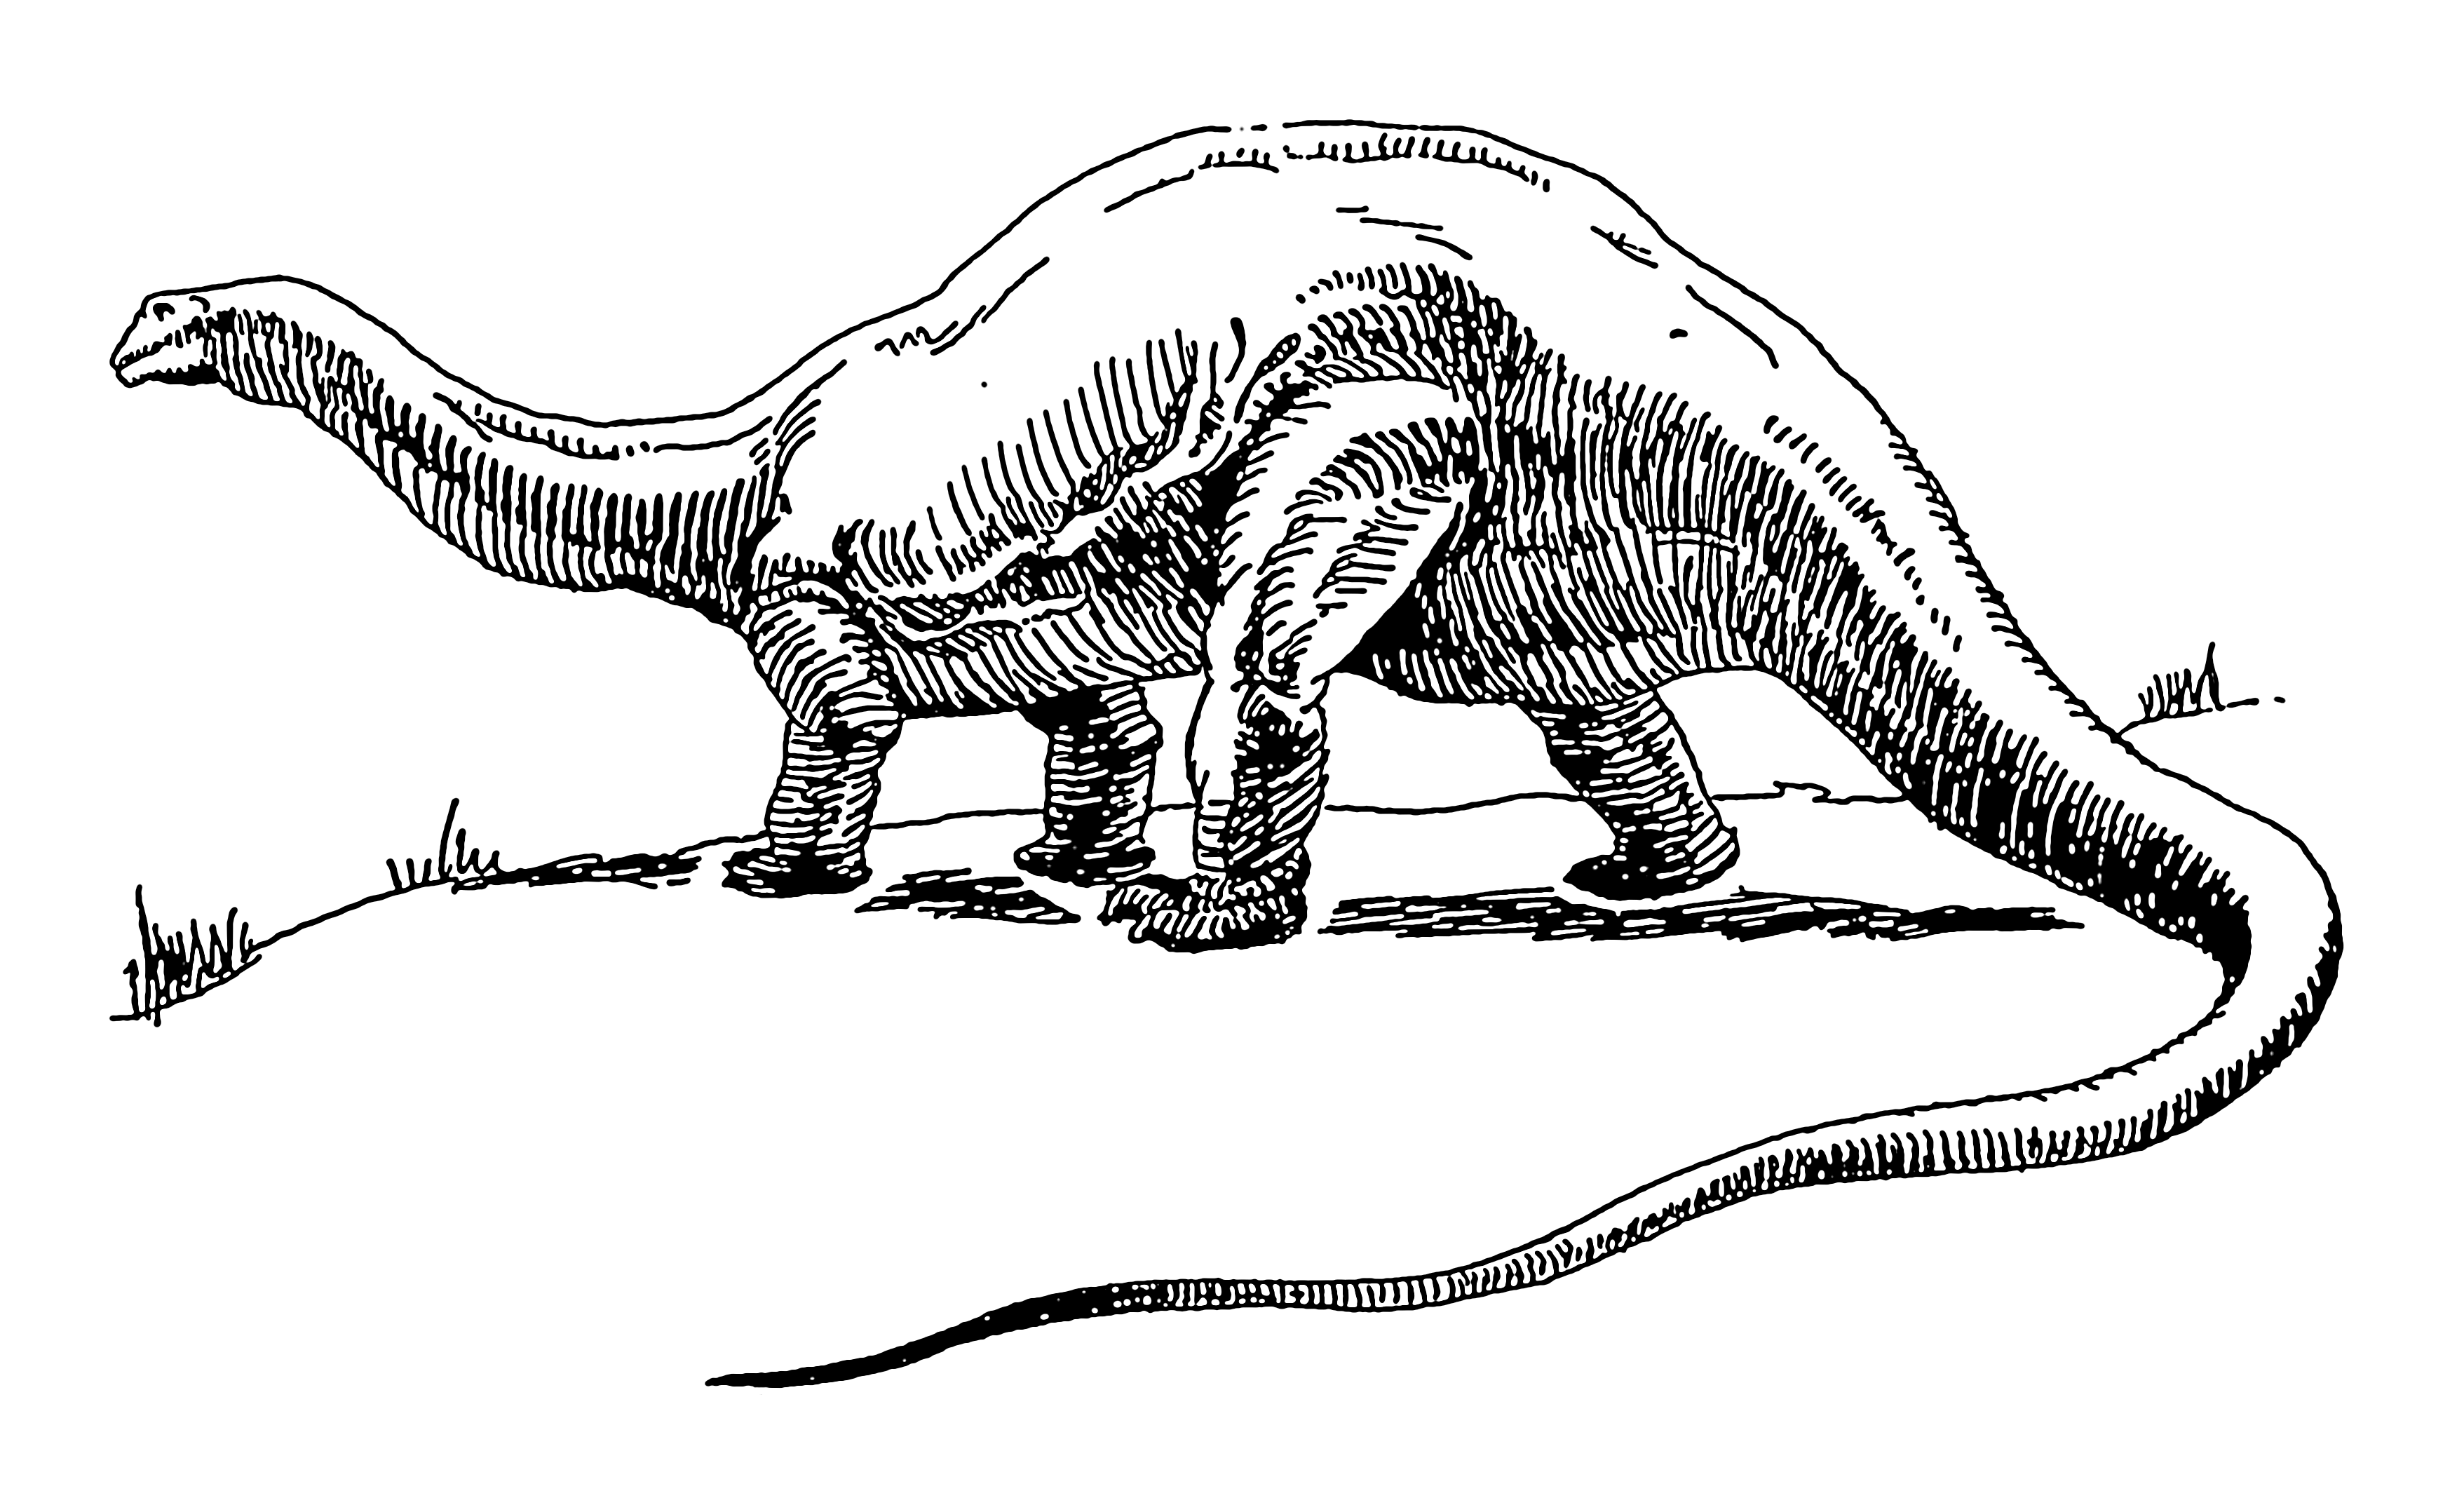 File:Dinosaur - brontosaurus (PSF).png - Wikimedia Commons